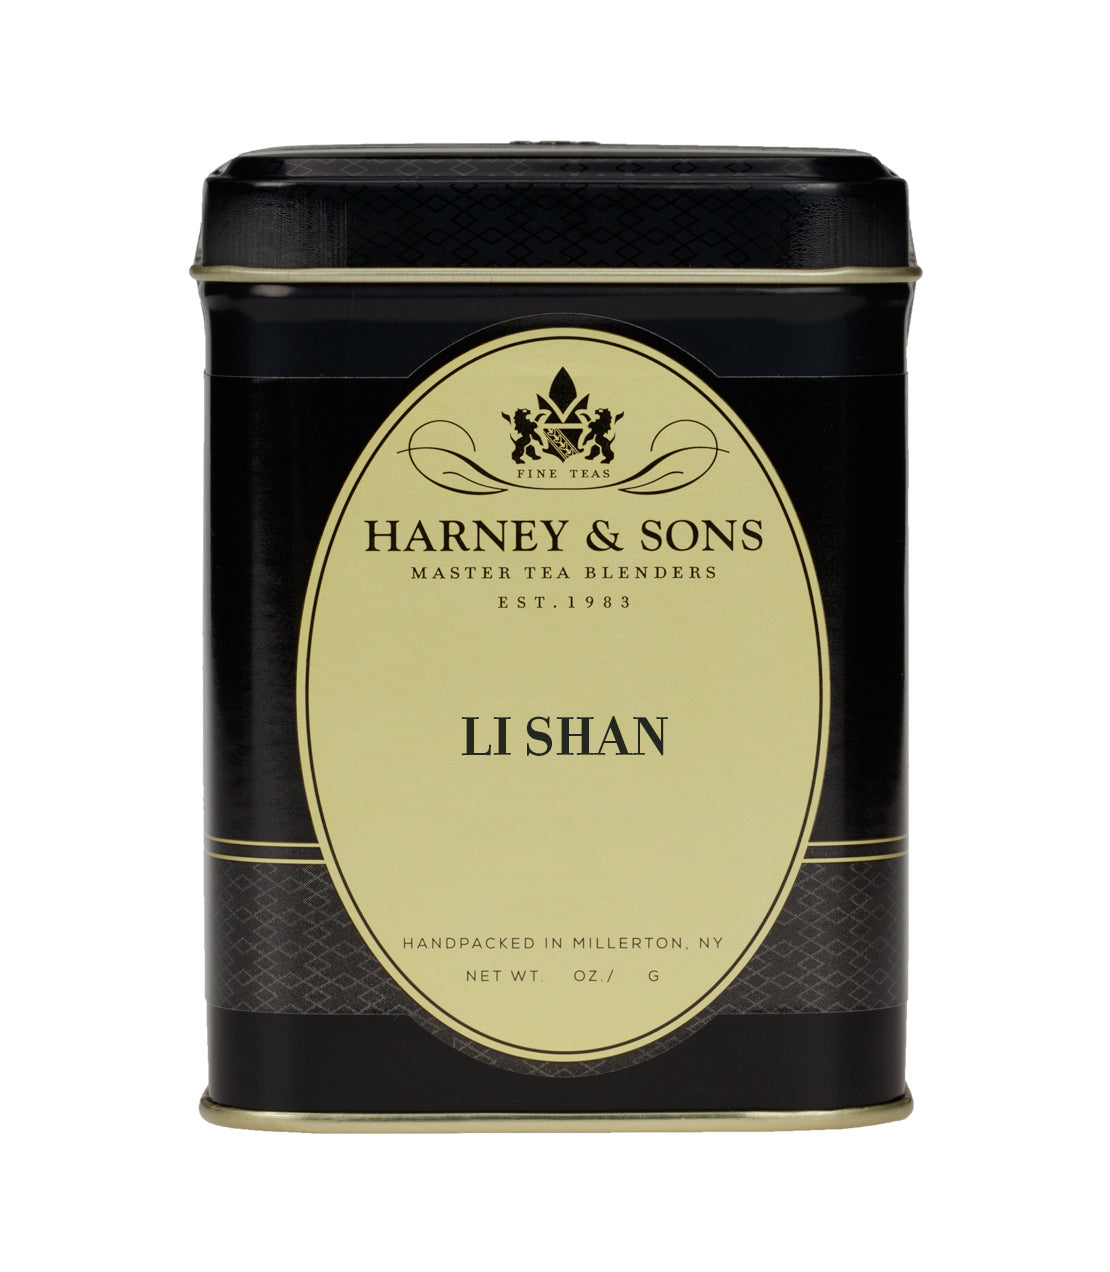 Li Shan - Loose 2 oz. Tin - Harney & Sons Fine Teas